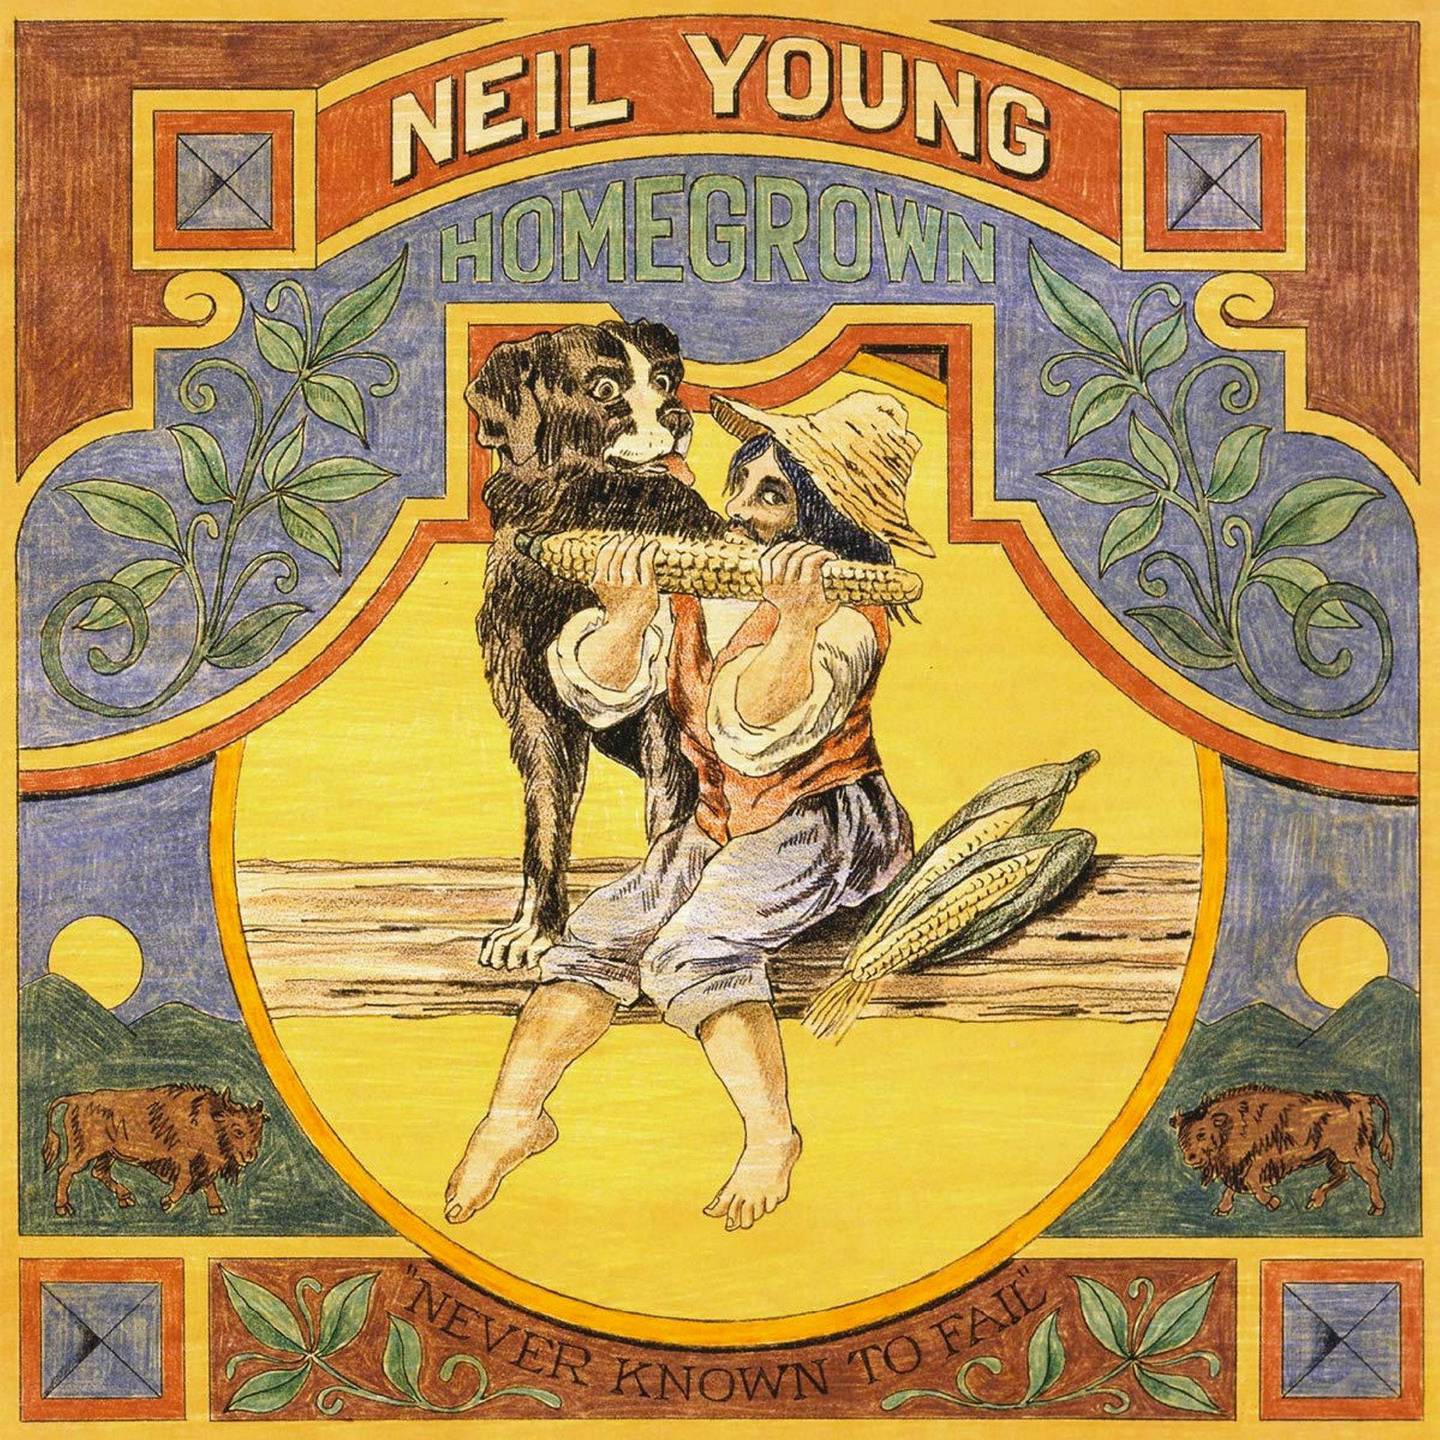 Neil Young,KUL Anm Musikk B:«Homegrown»
KUL Anm Musikk C:Reprise